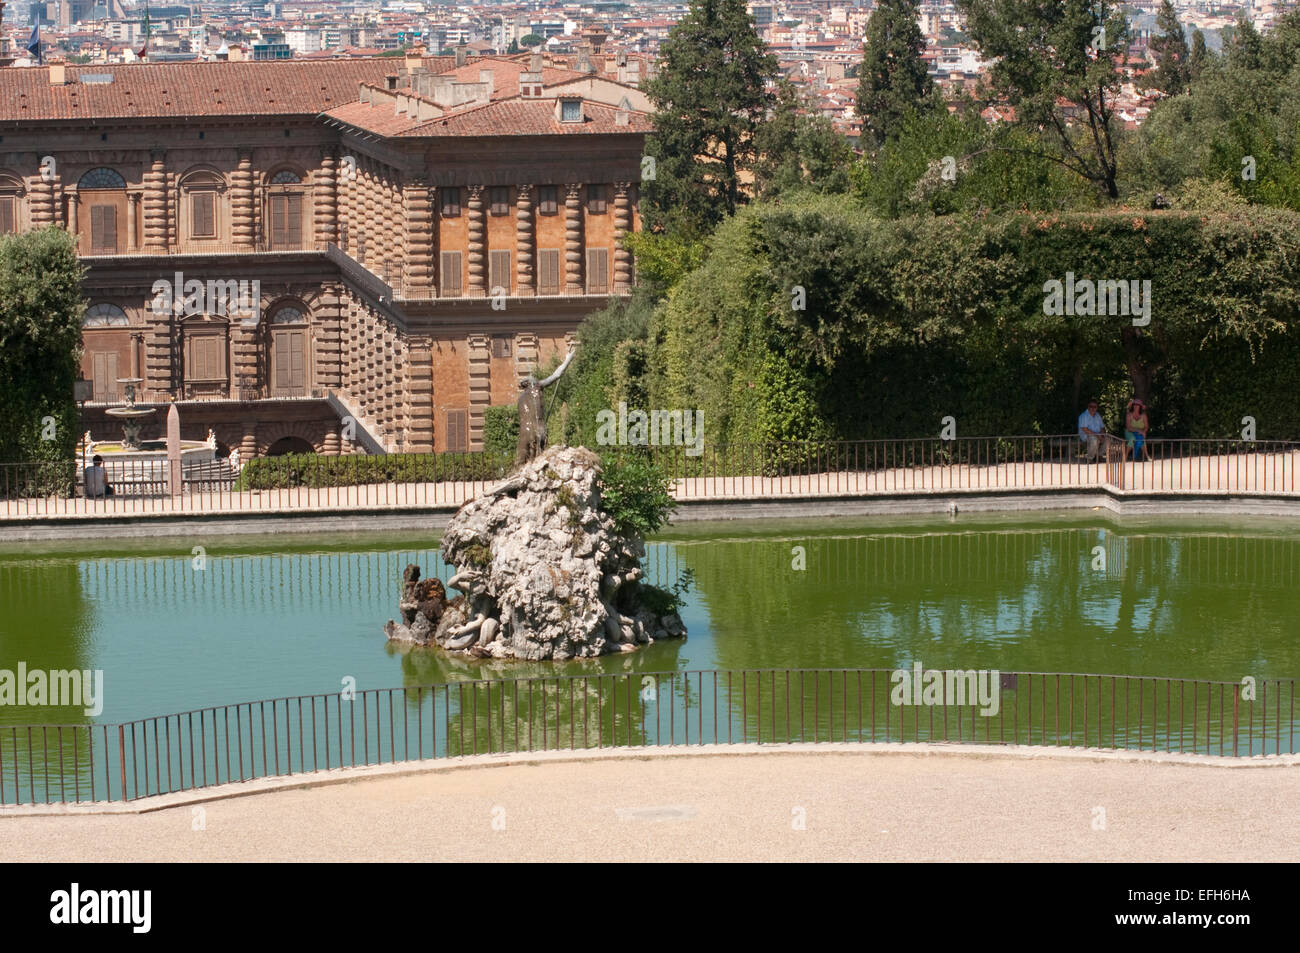 Truscany, Florenz, Italien, Giardino Dei Boboli Garten Brunnen Hintergrund Palazzo Pitti Palace Stockfoto